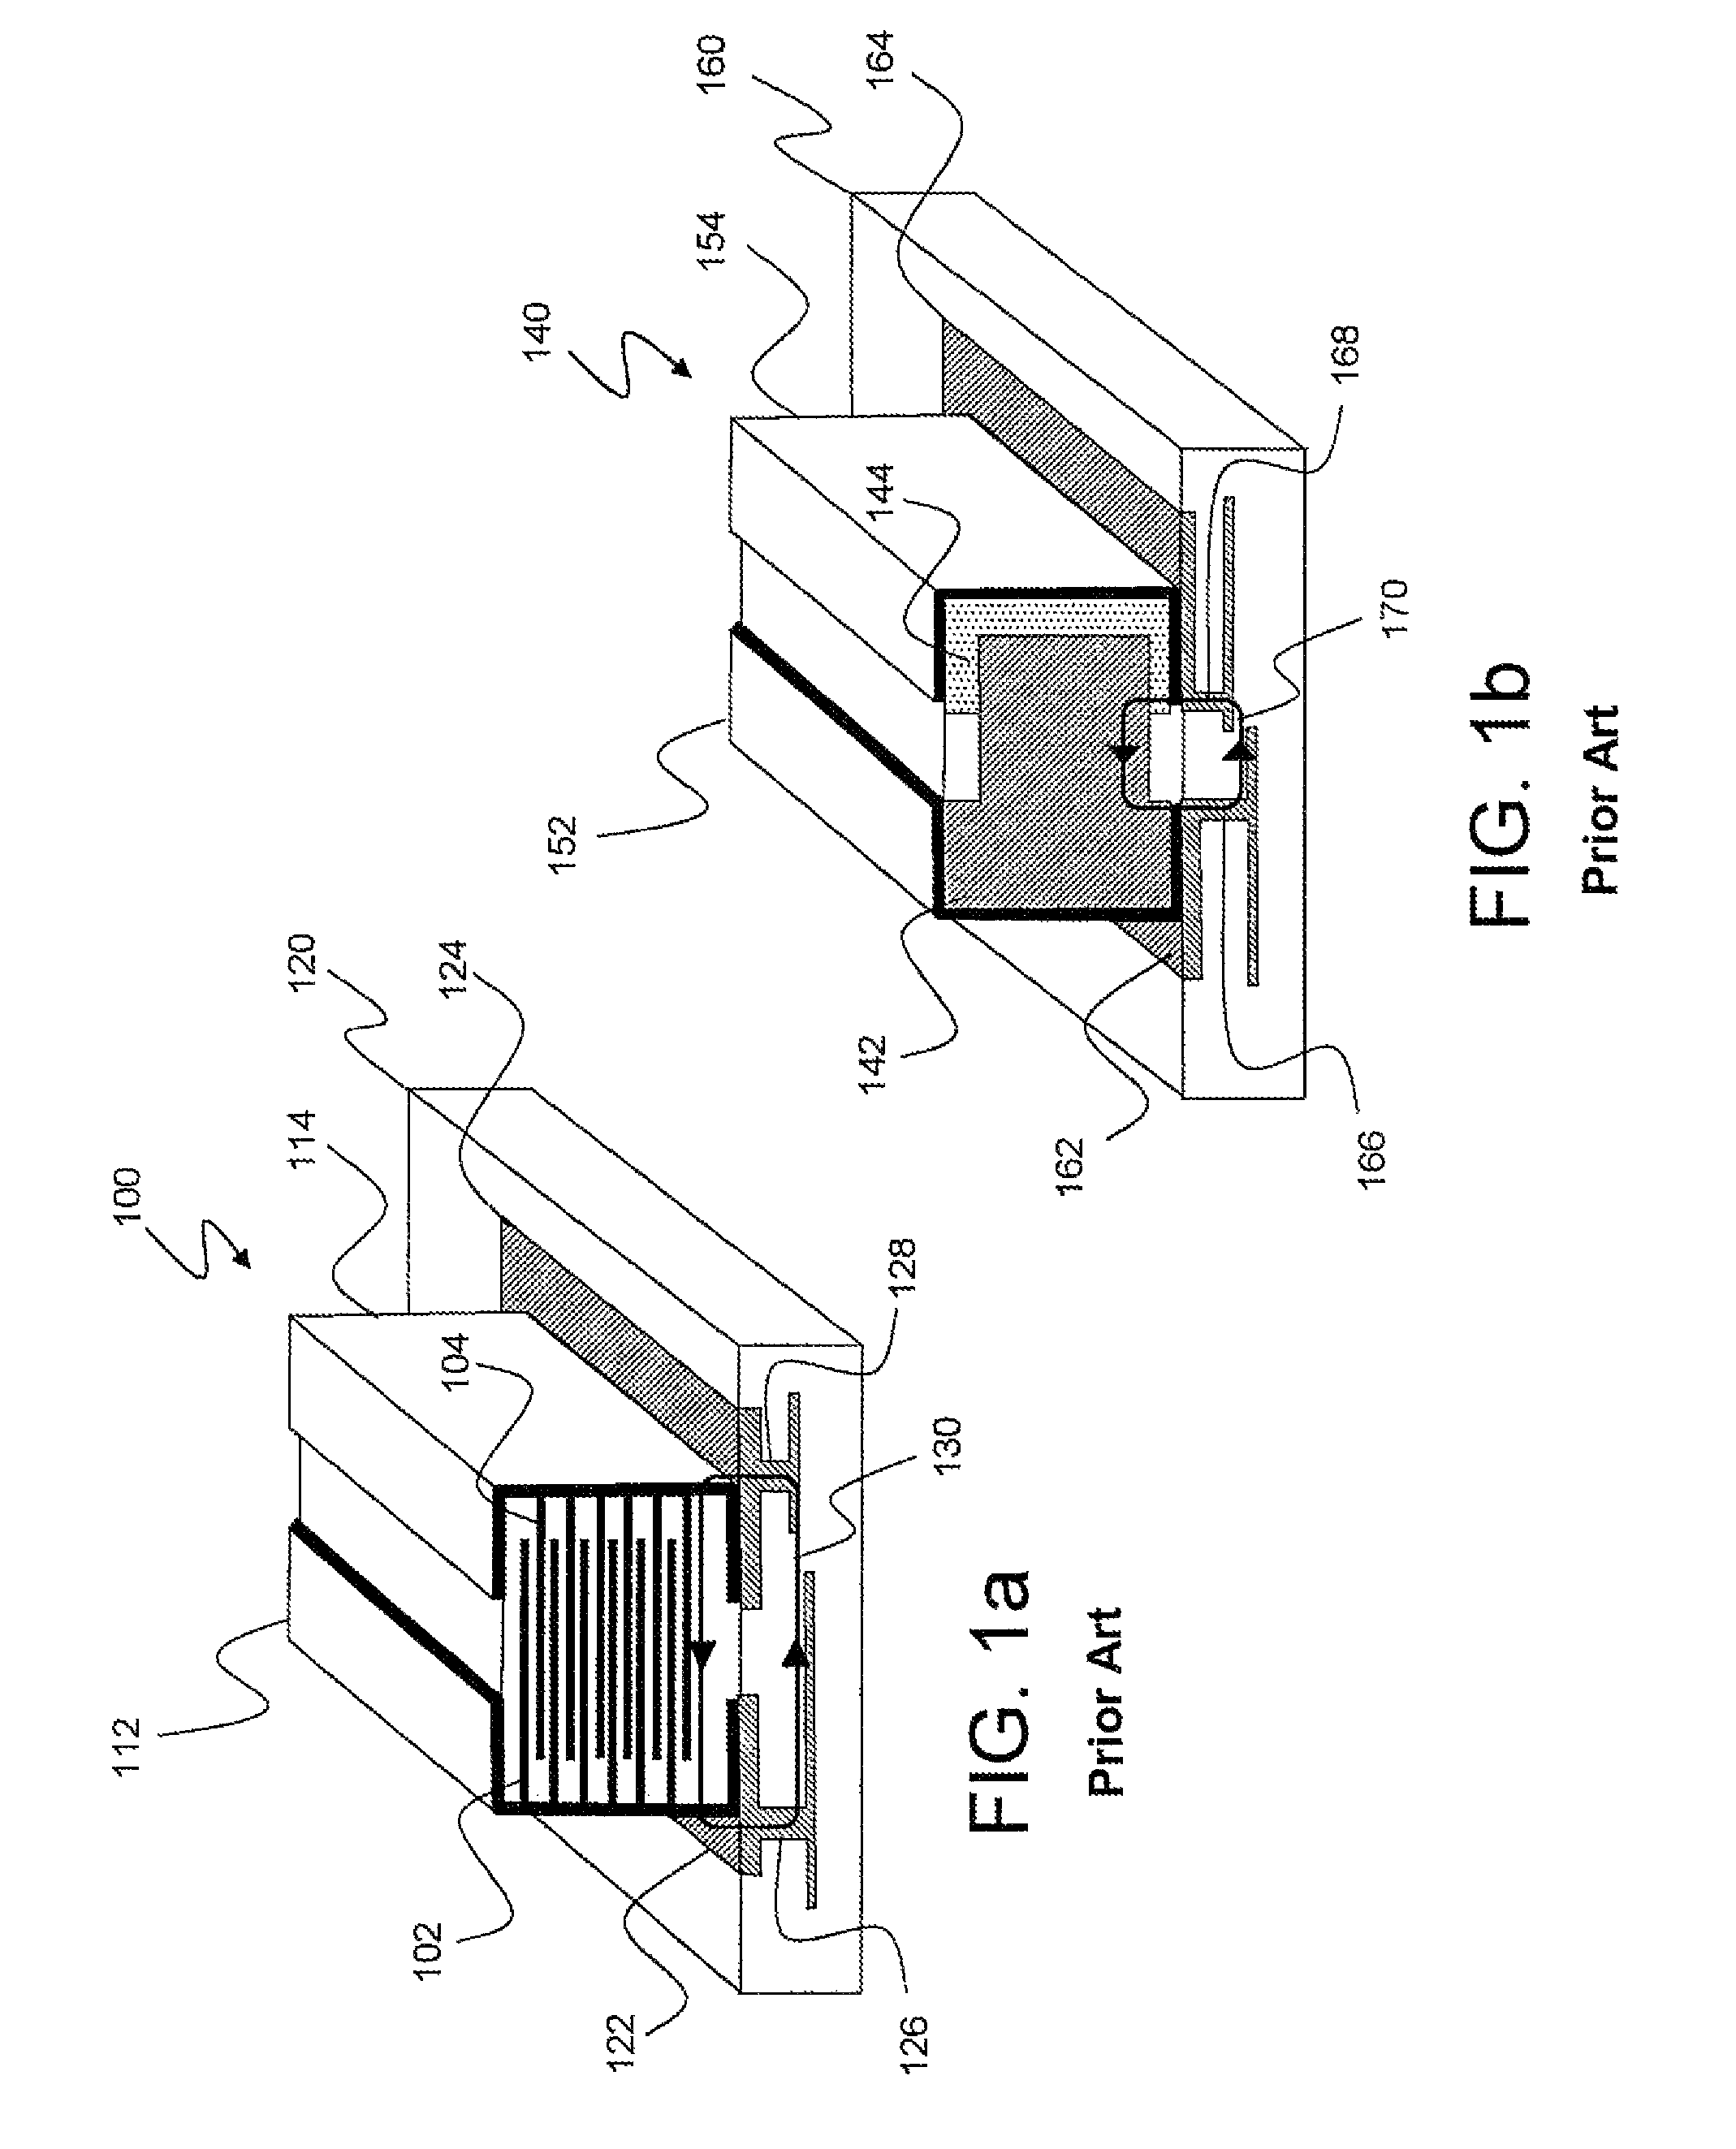 Controlled ESR decoupling capacitor